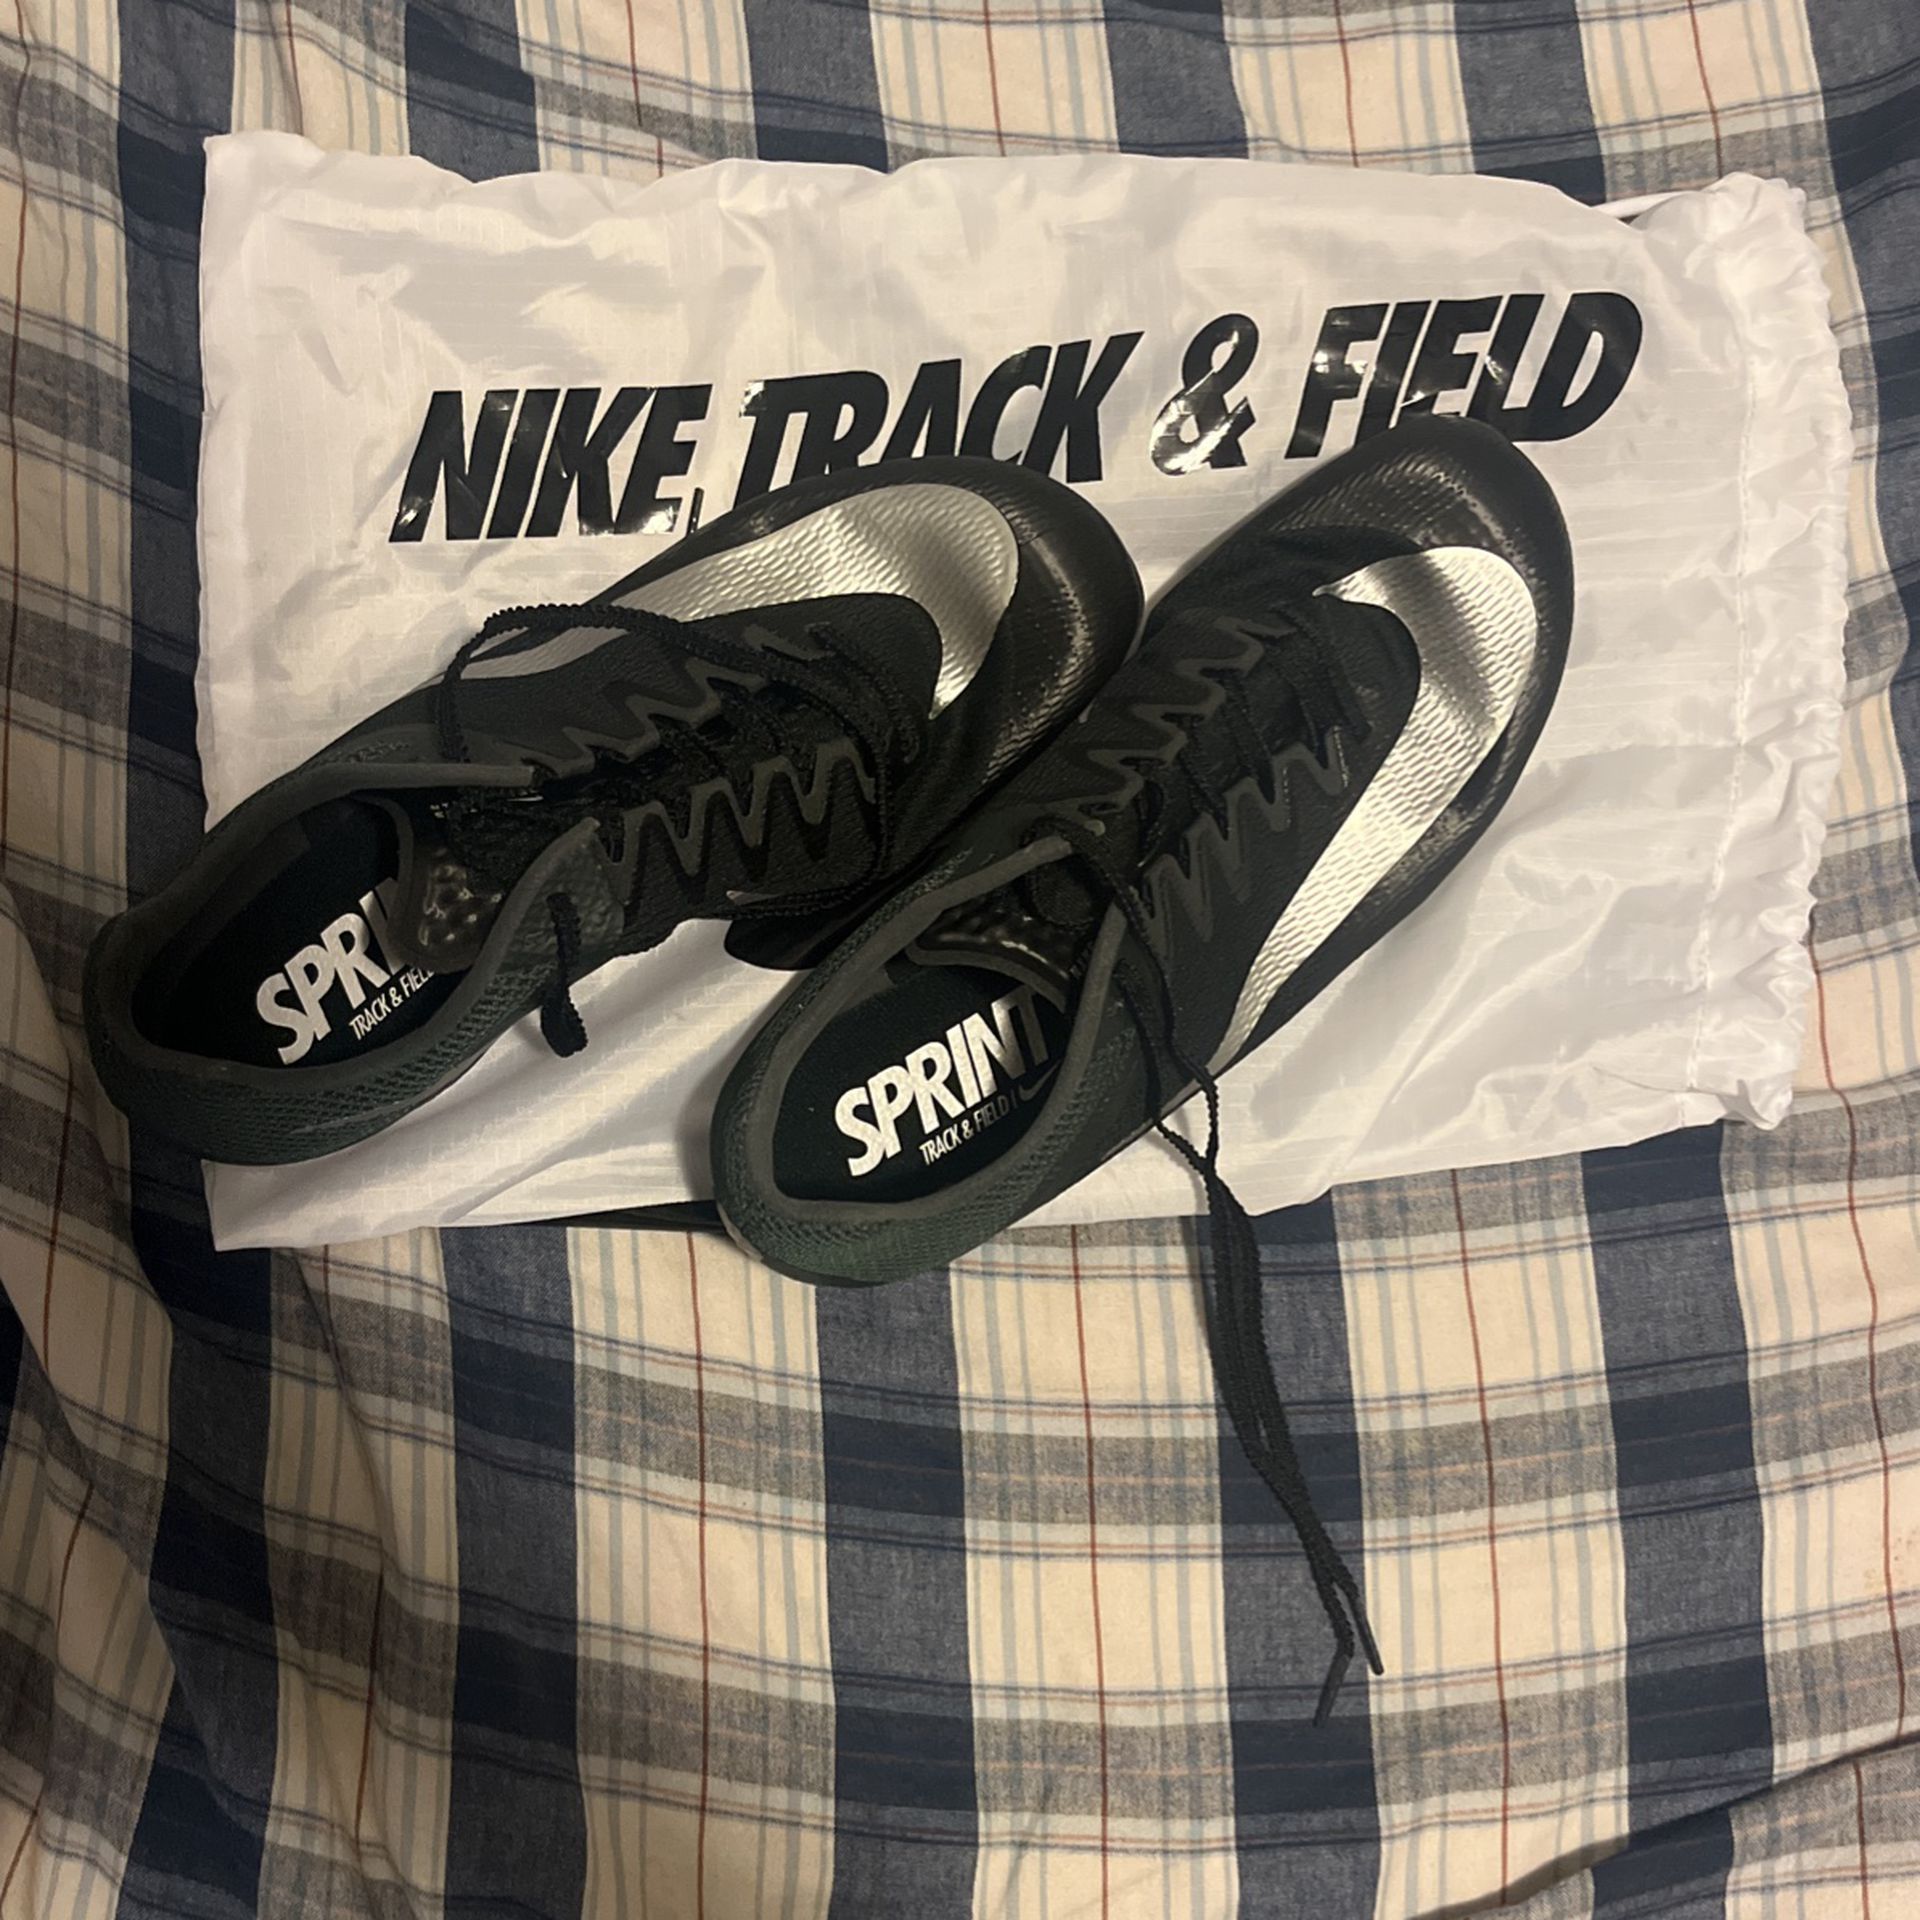 Nike Track Shoes